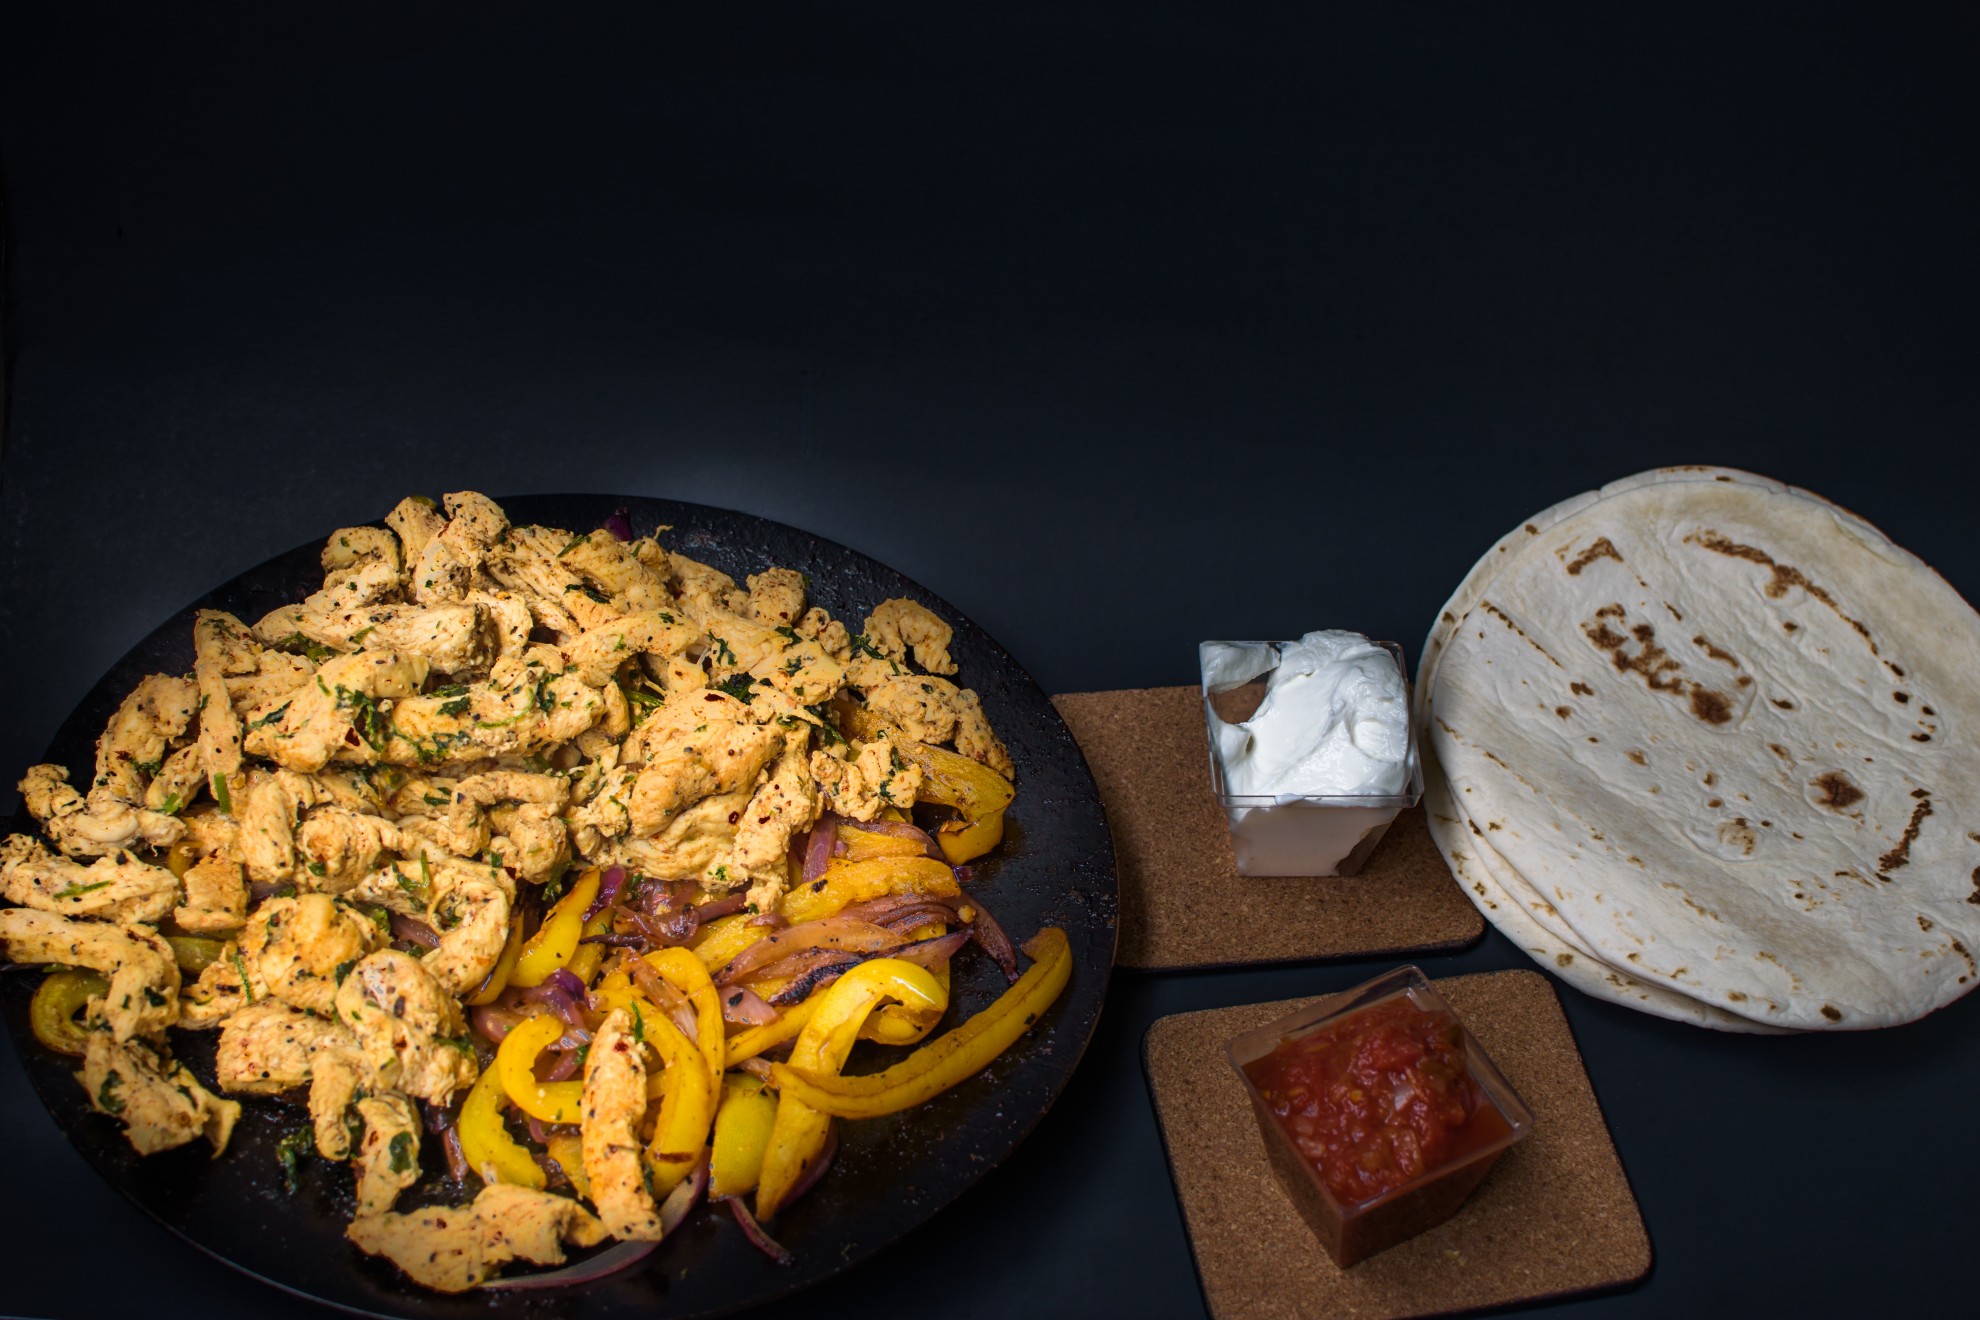 Chicken Fajitas: Perfect Mexican Meal